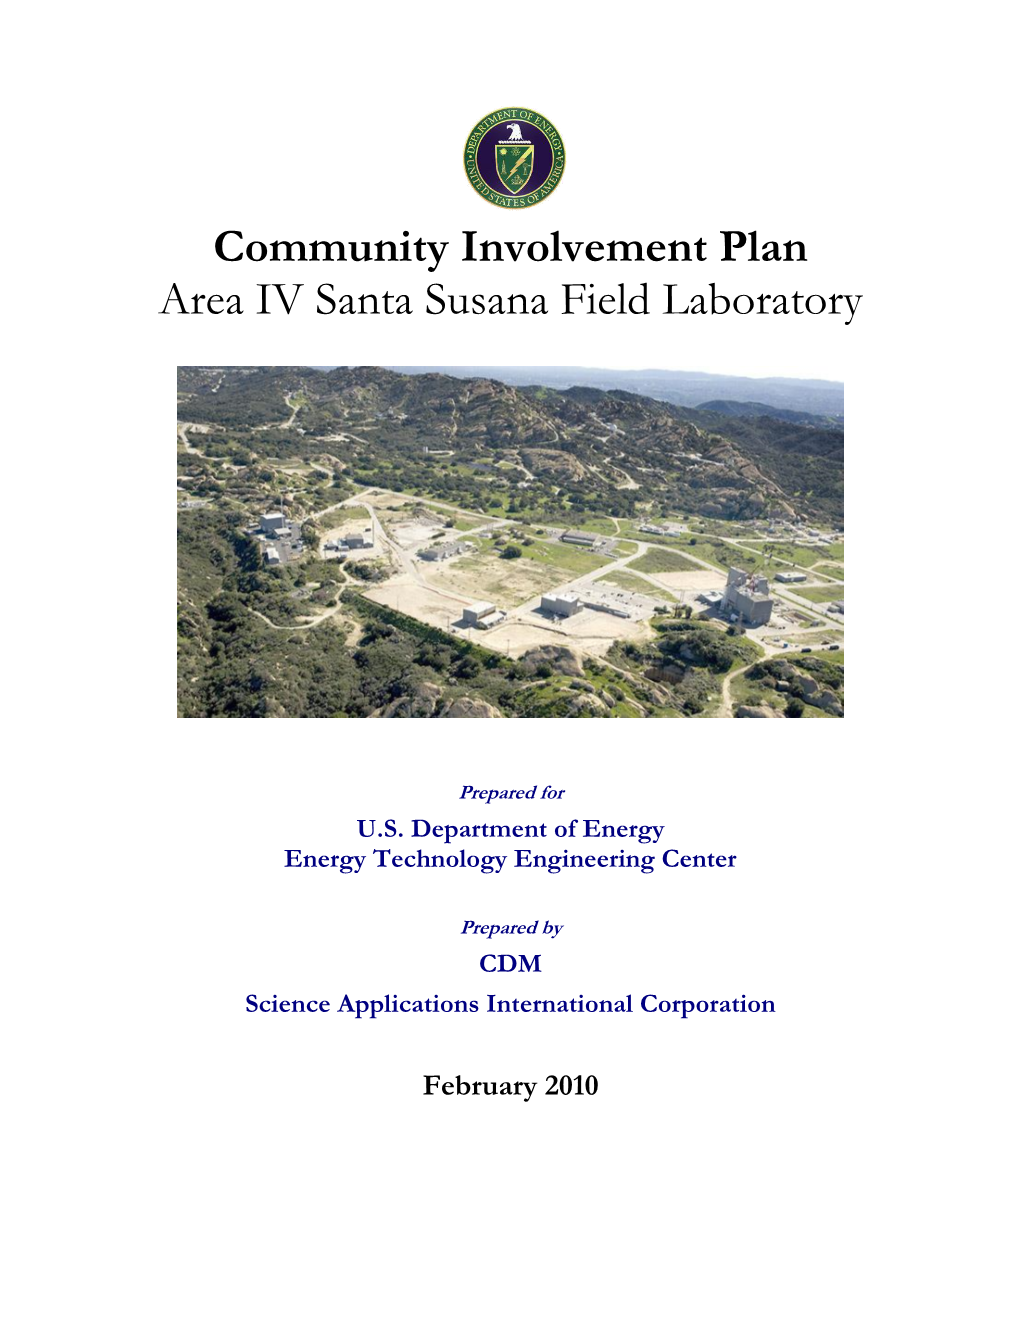 Community Involvement Plan Area IV Santa Susana Field Laboratory